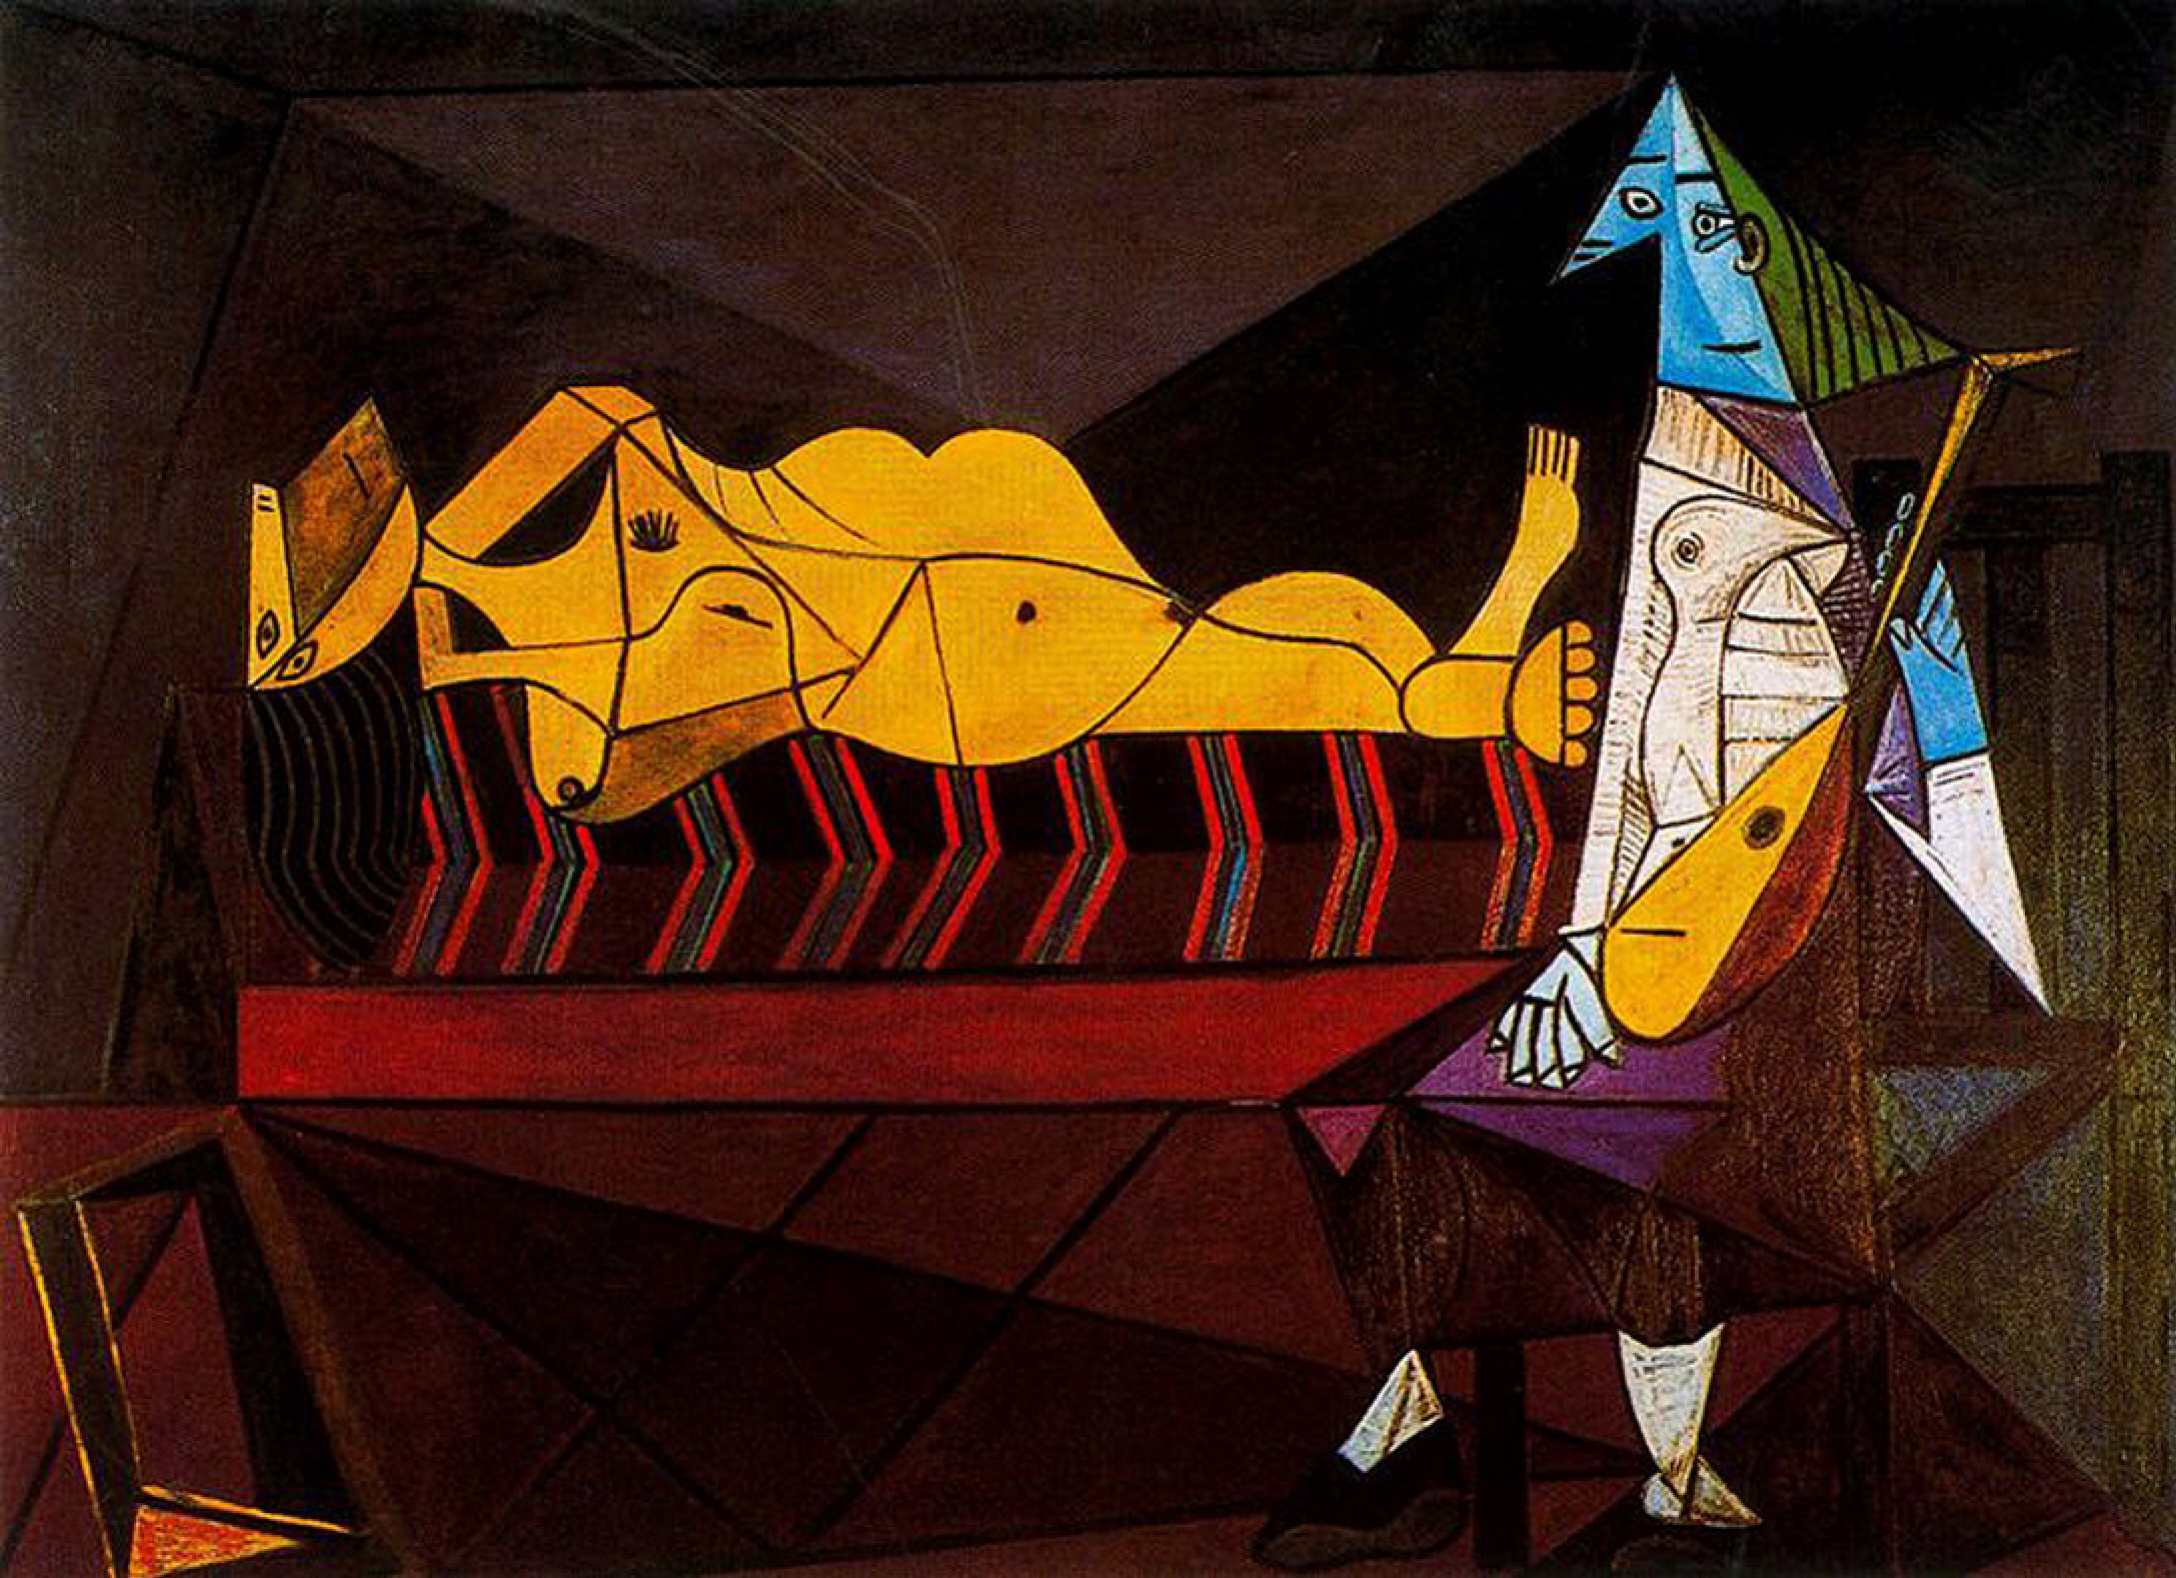 Pablo Picasso Naked woman, 1909, 81×100 cm: Description of the